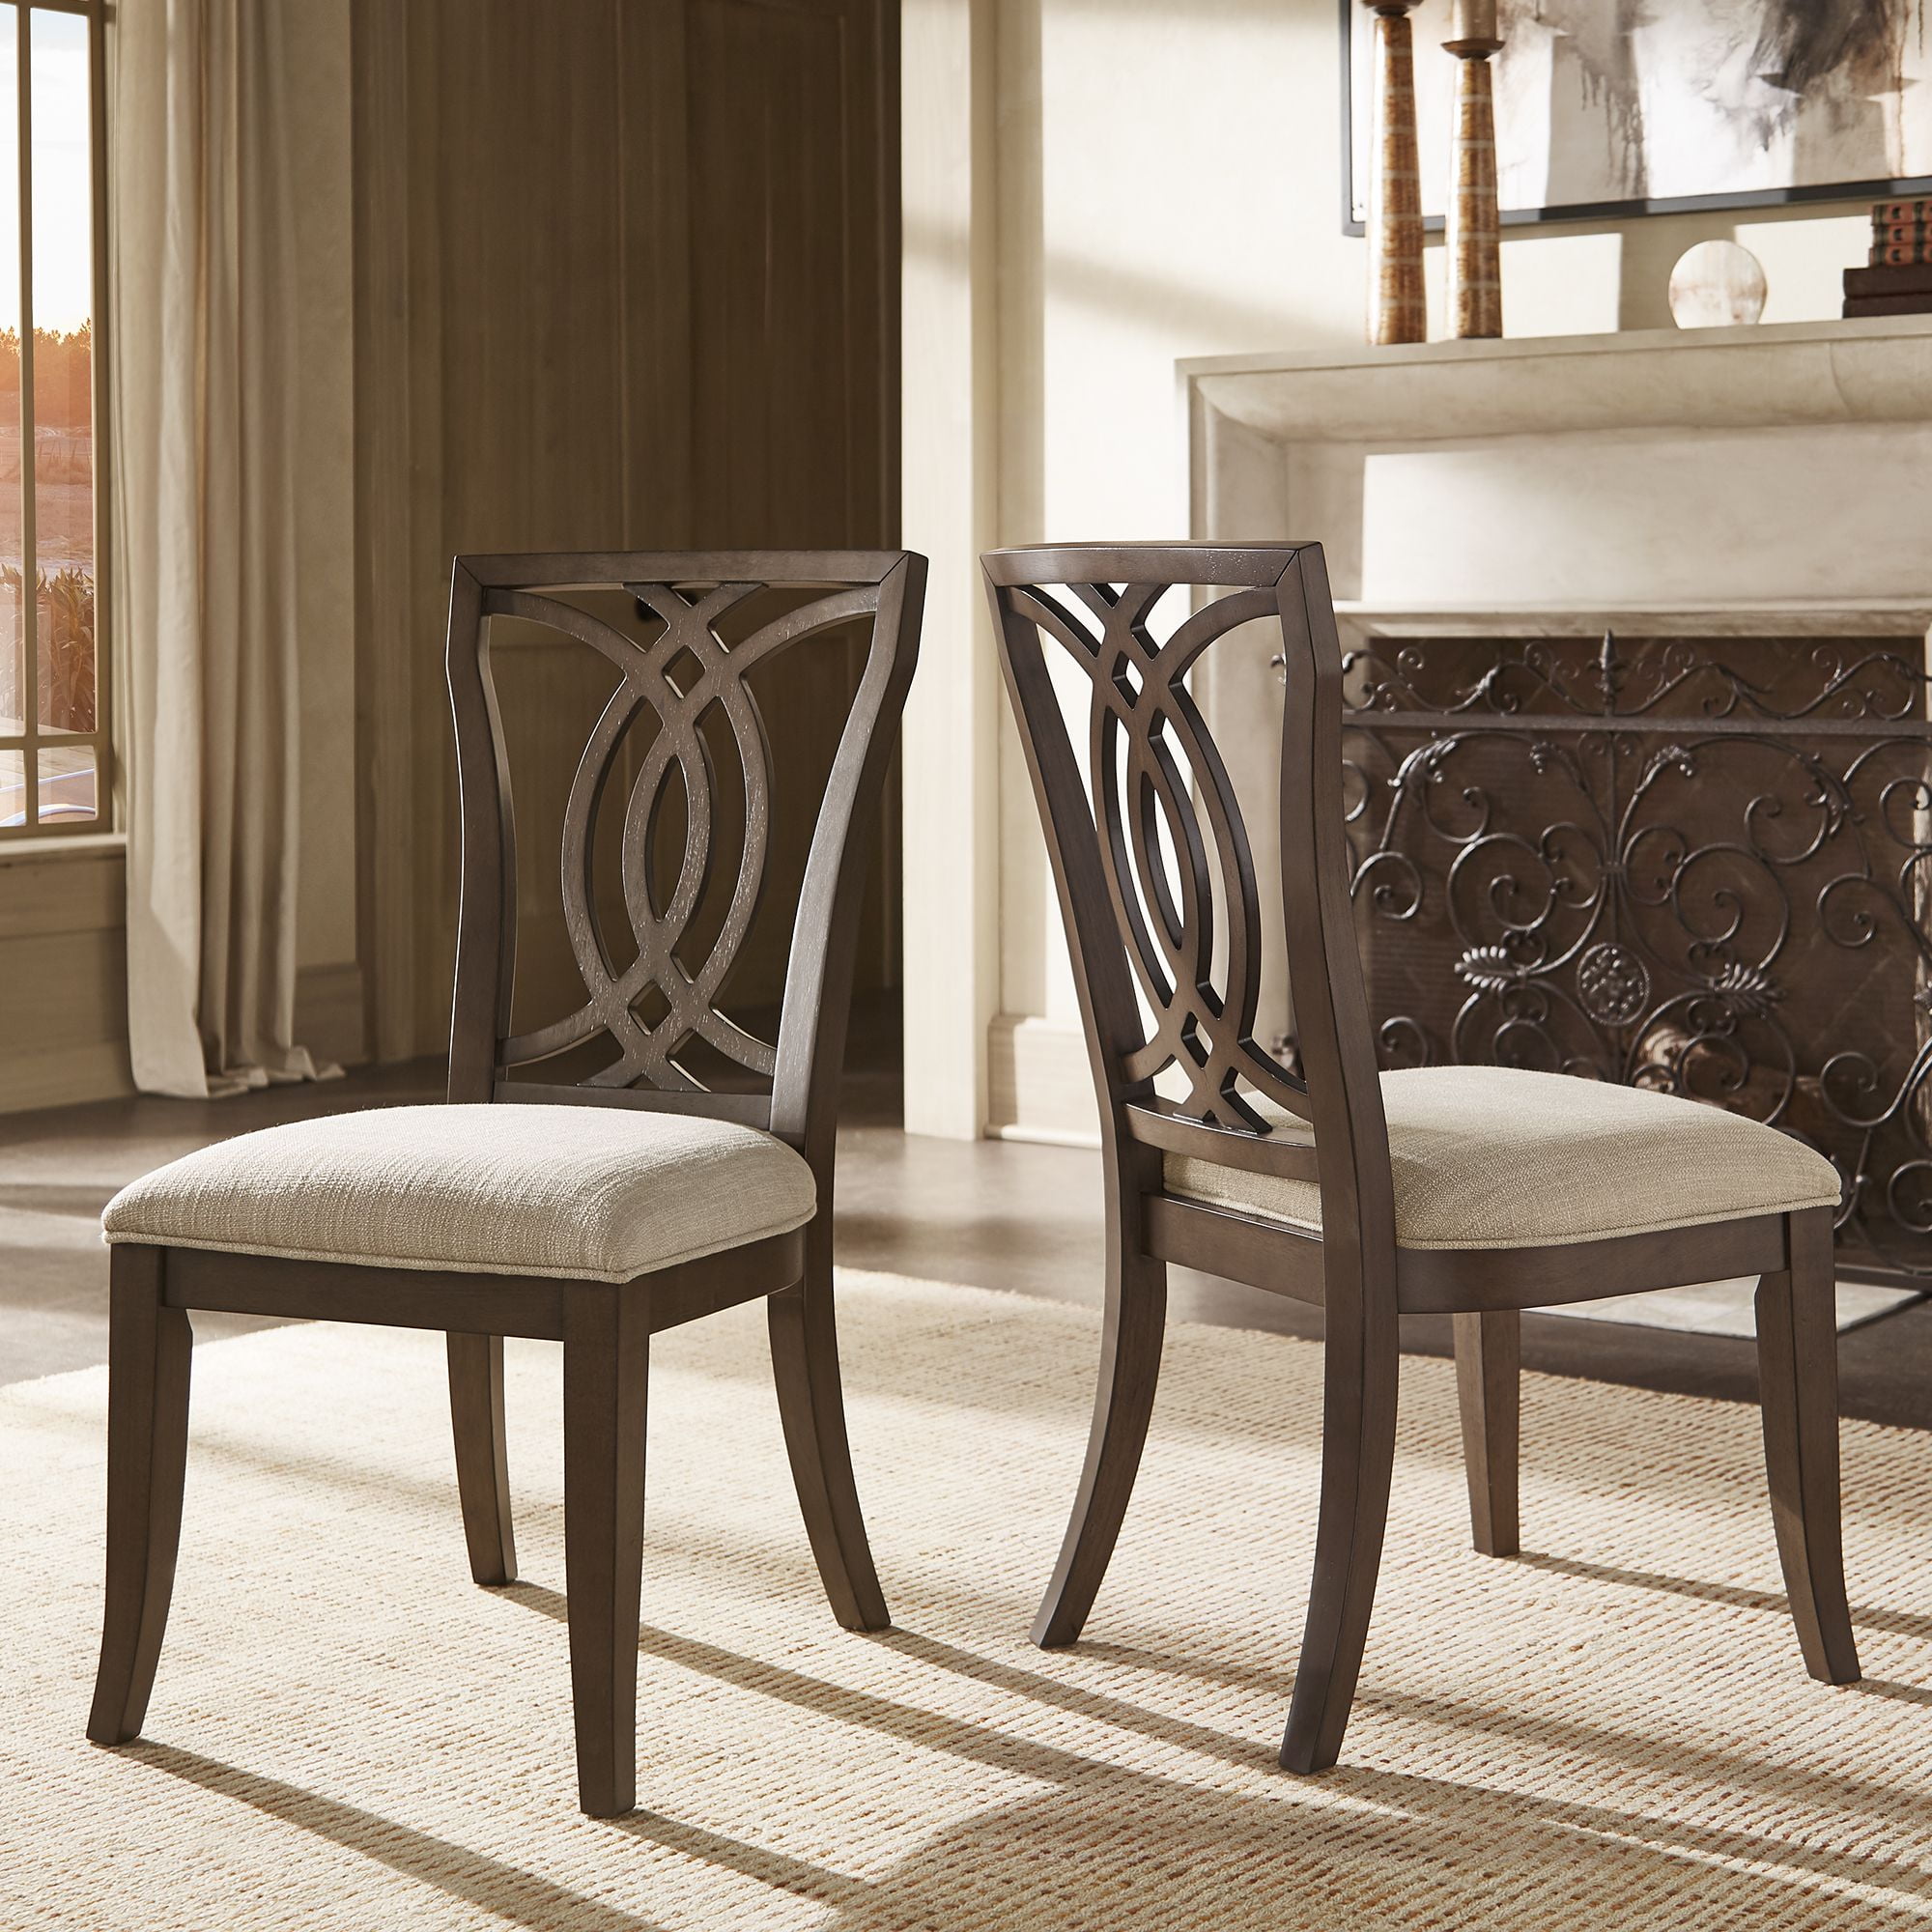 Weston Home Rococo Wood Upholstered Dining Chairs Set Of 2 Beige Fabric Dark Walnut Finish Side Chair Walmart Com